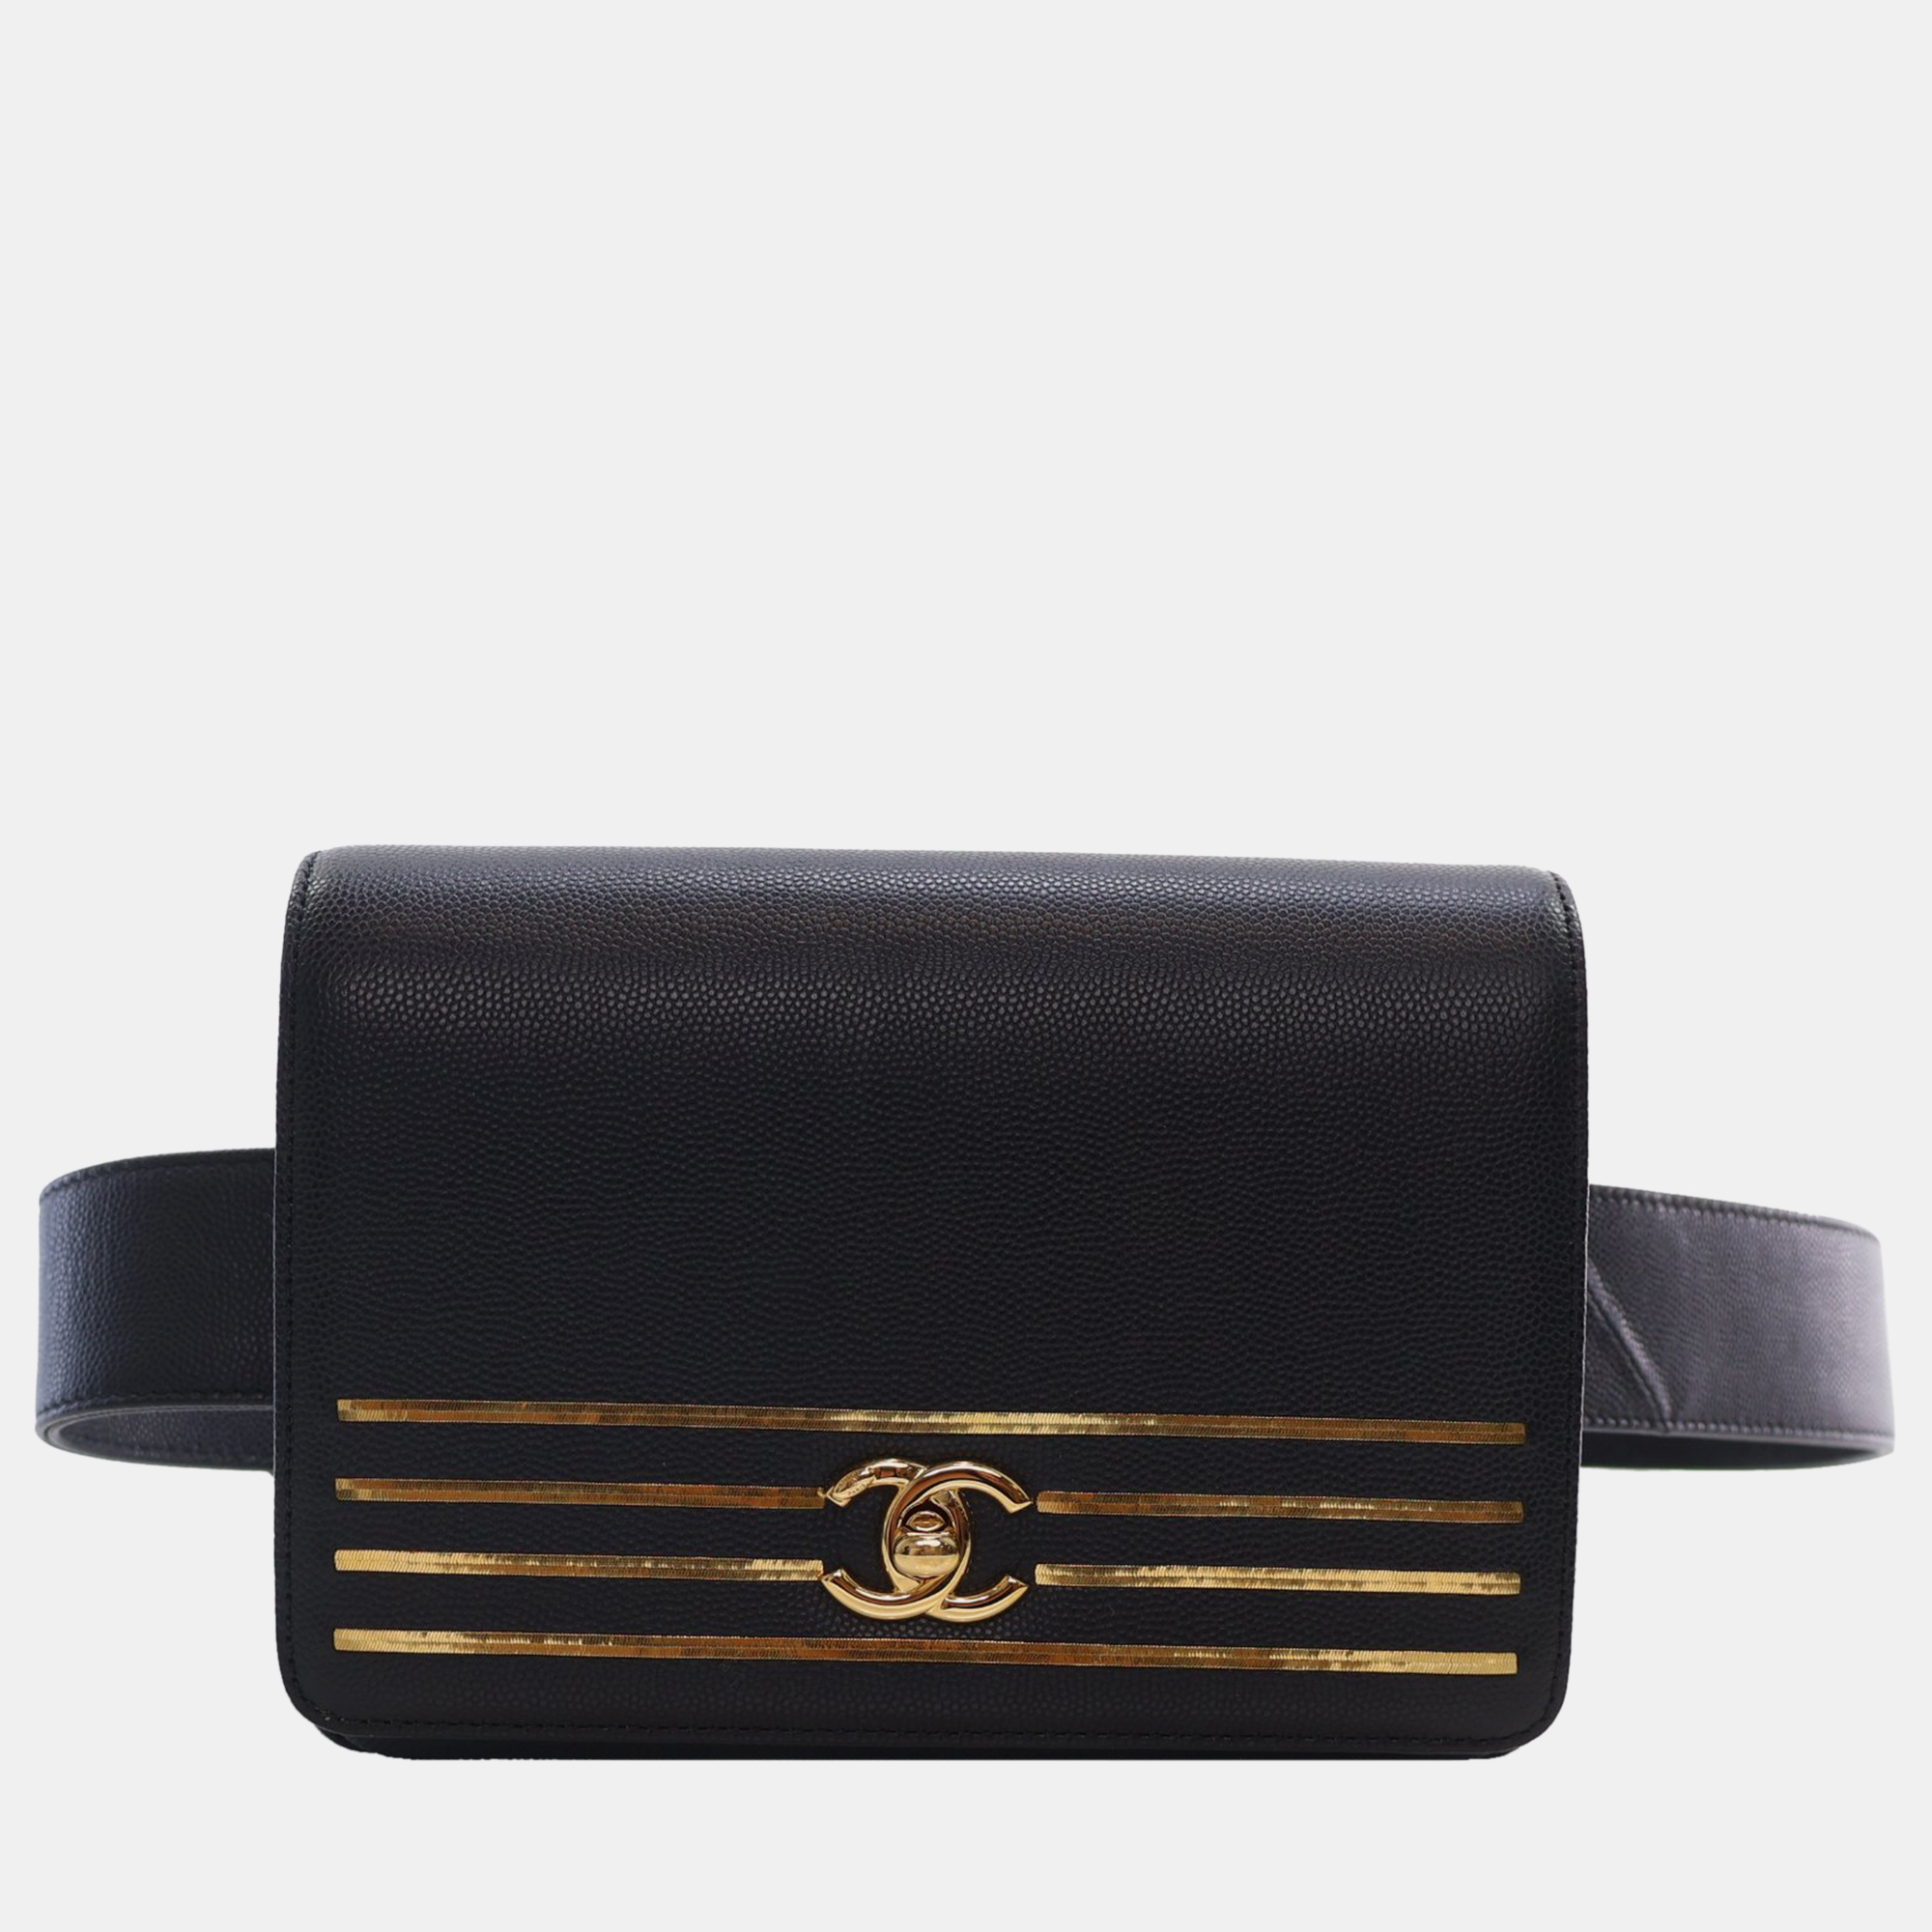 Chanel black caviar leather captain gold waist bag